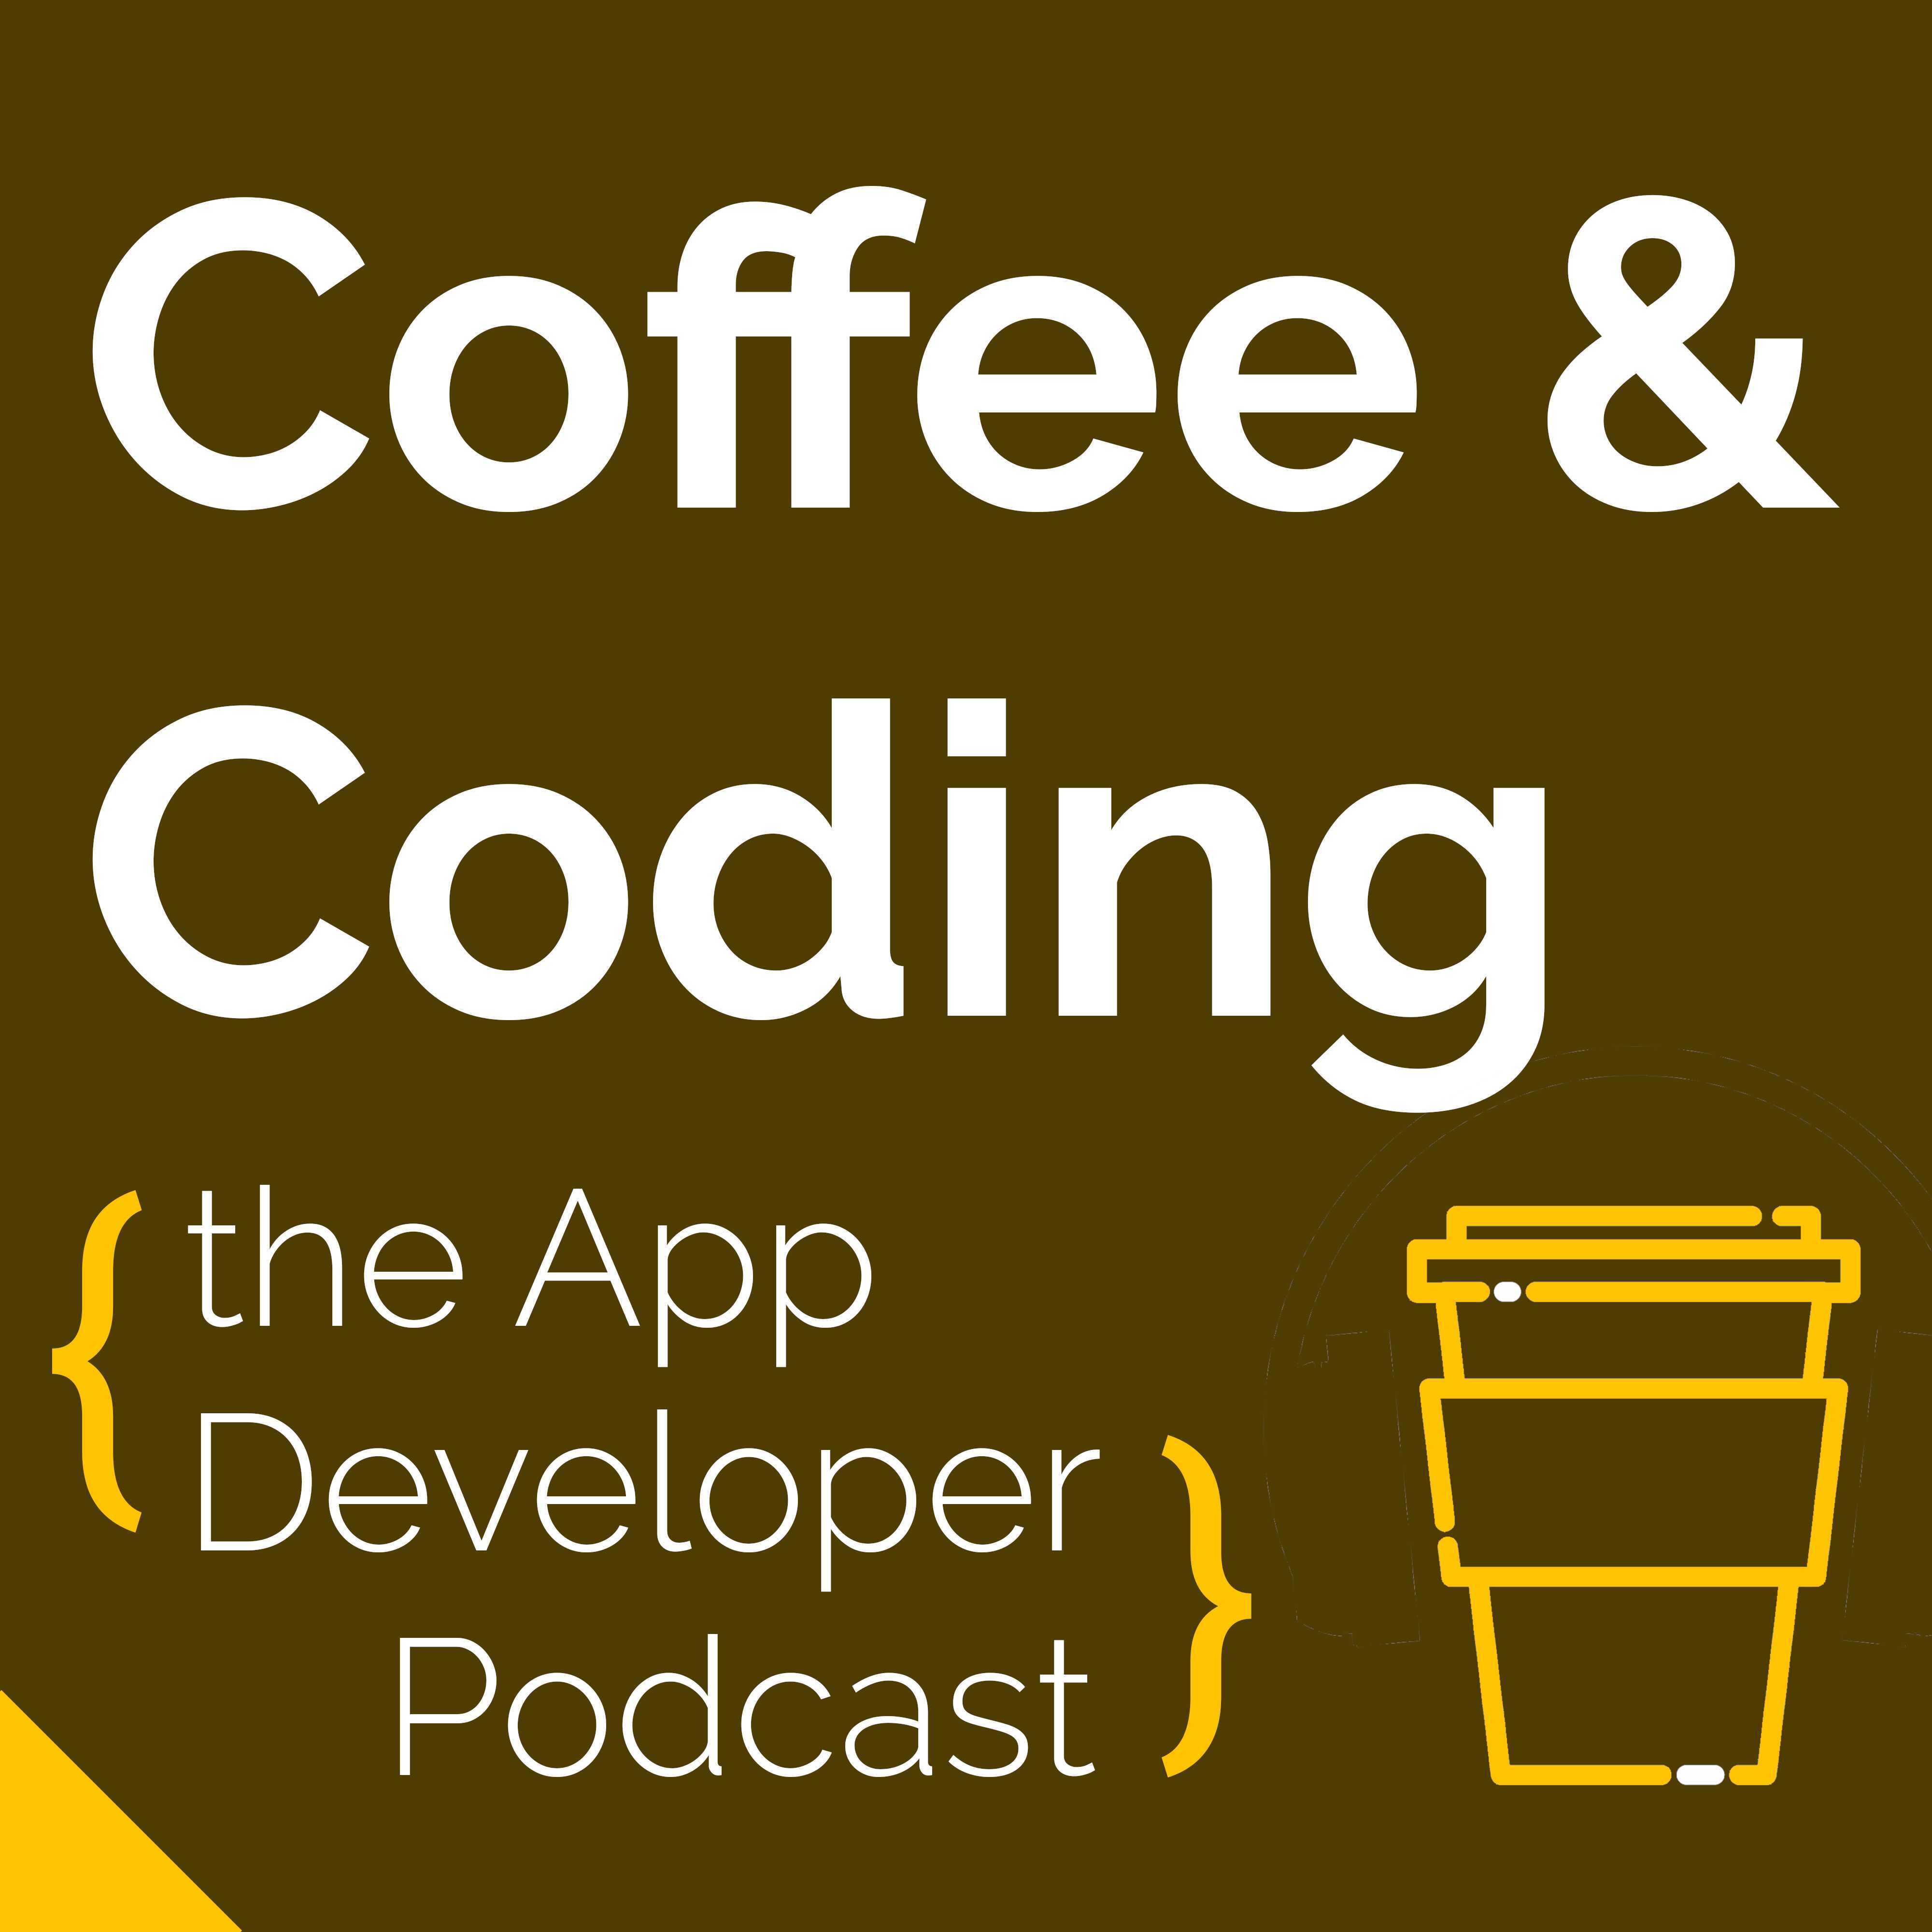 Community partner Coffee and coding pod